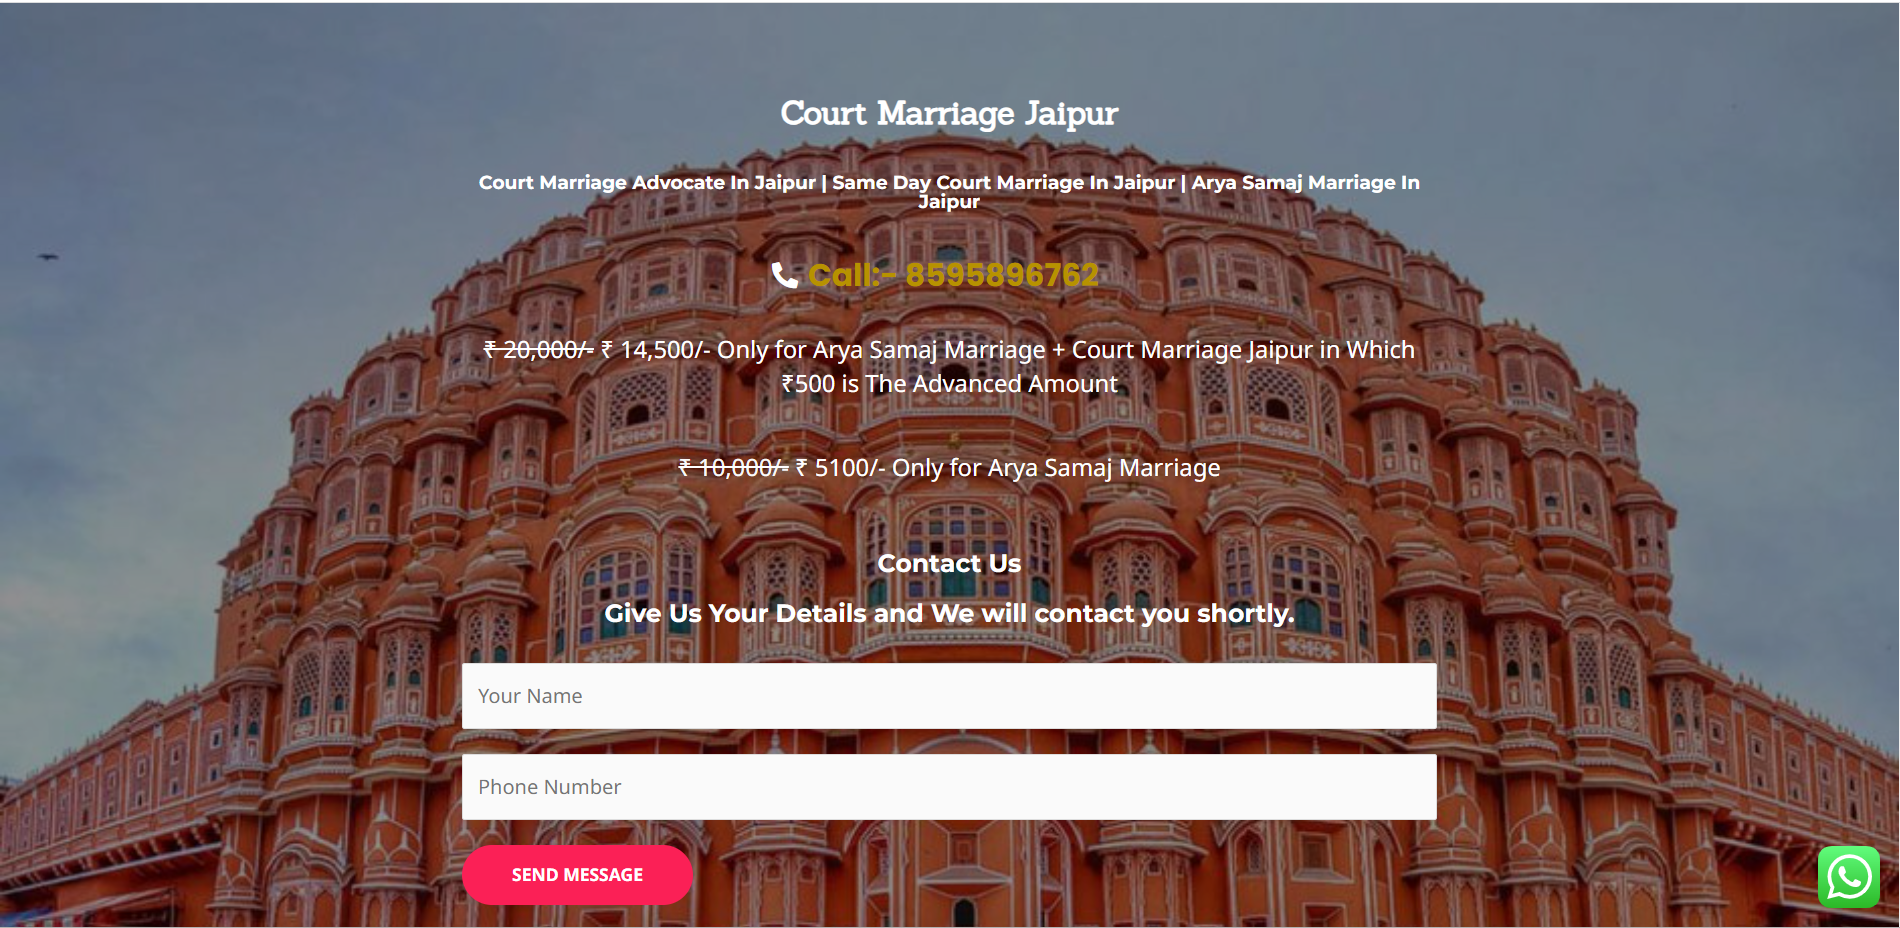 Court Marriage Jaipur